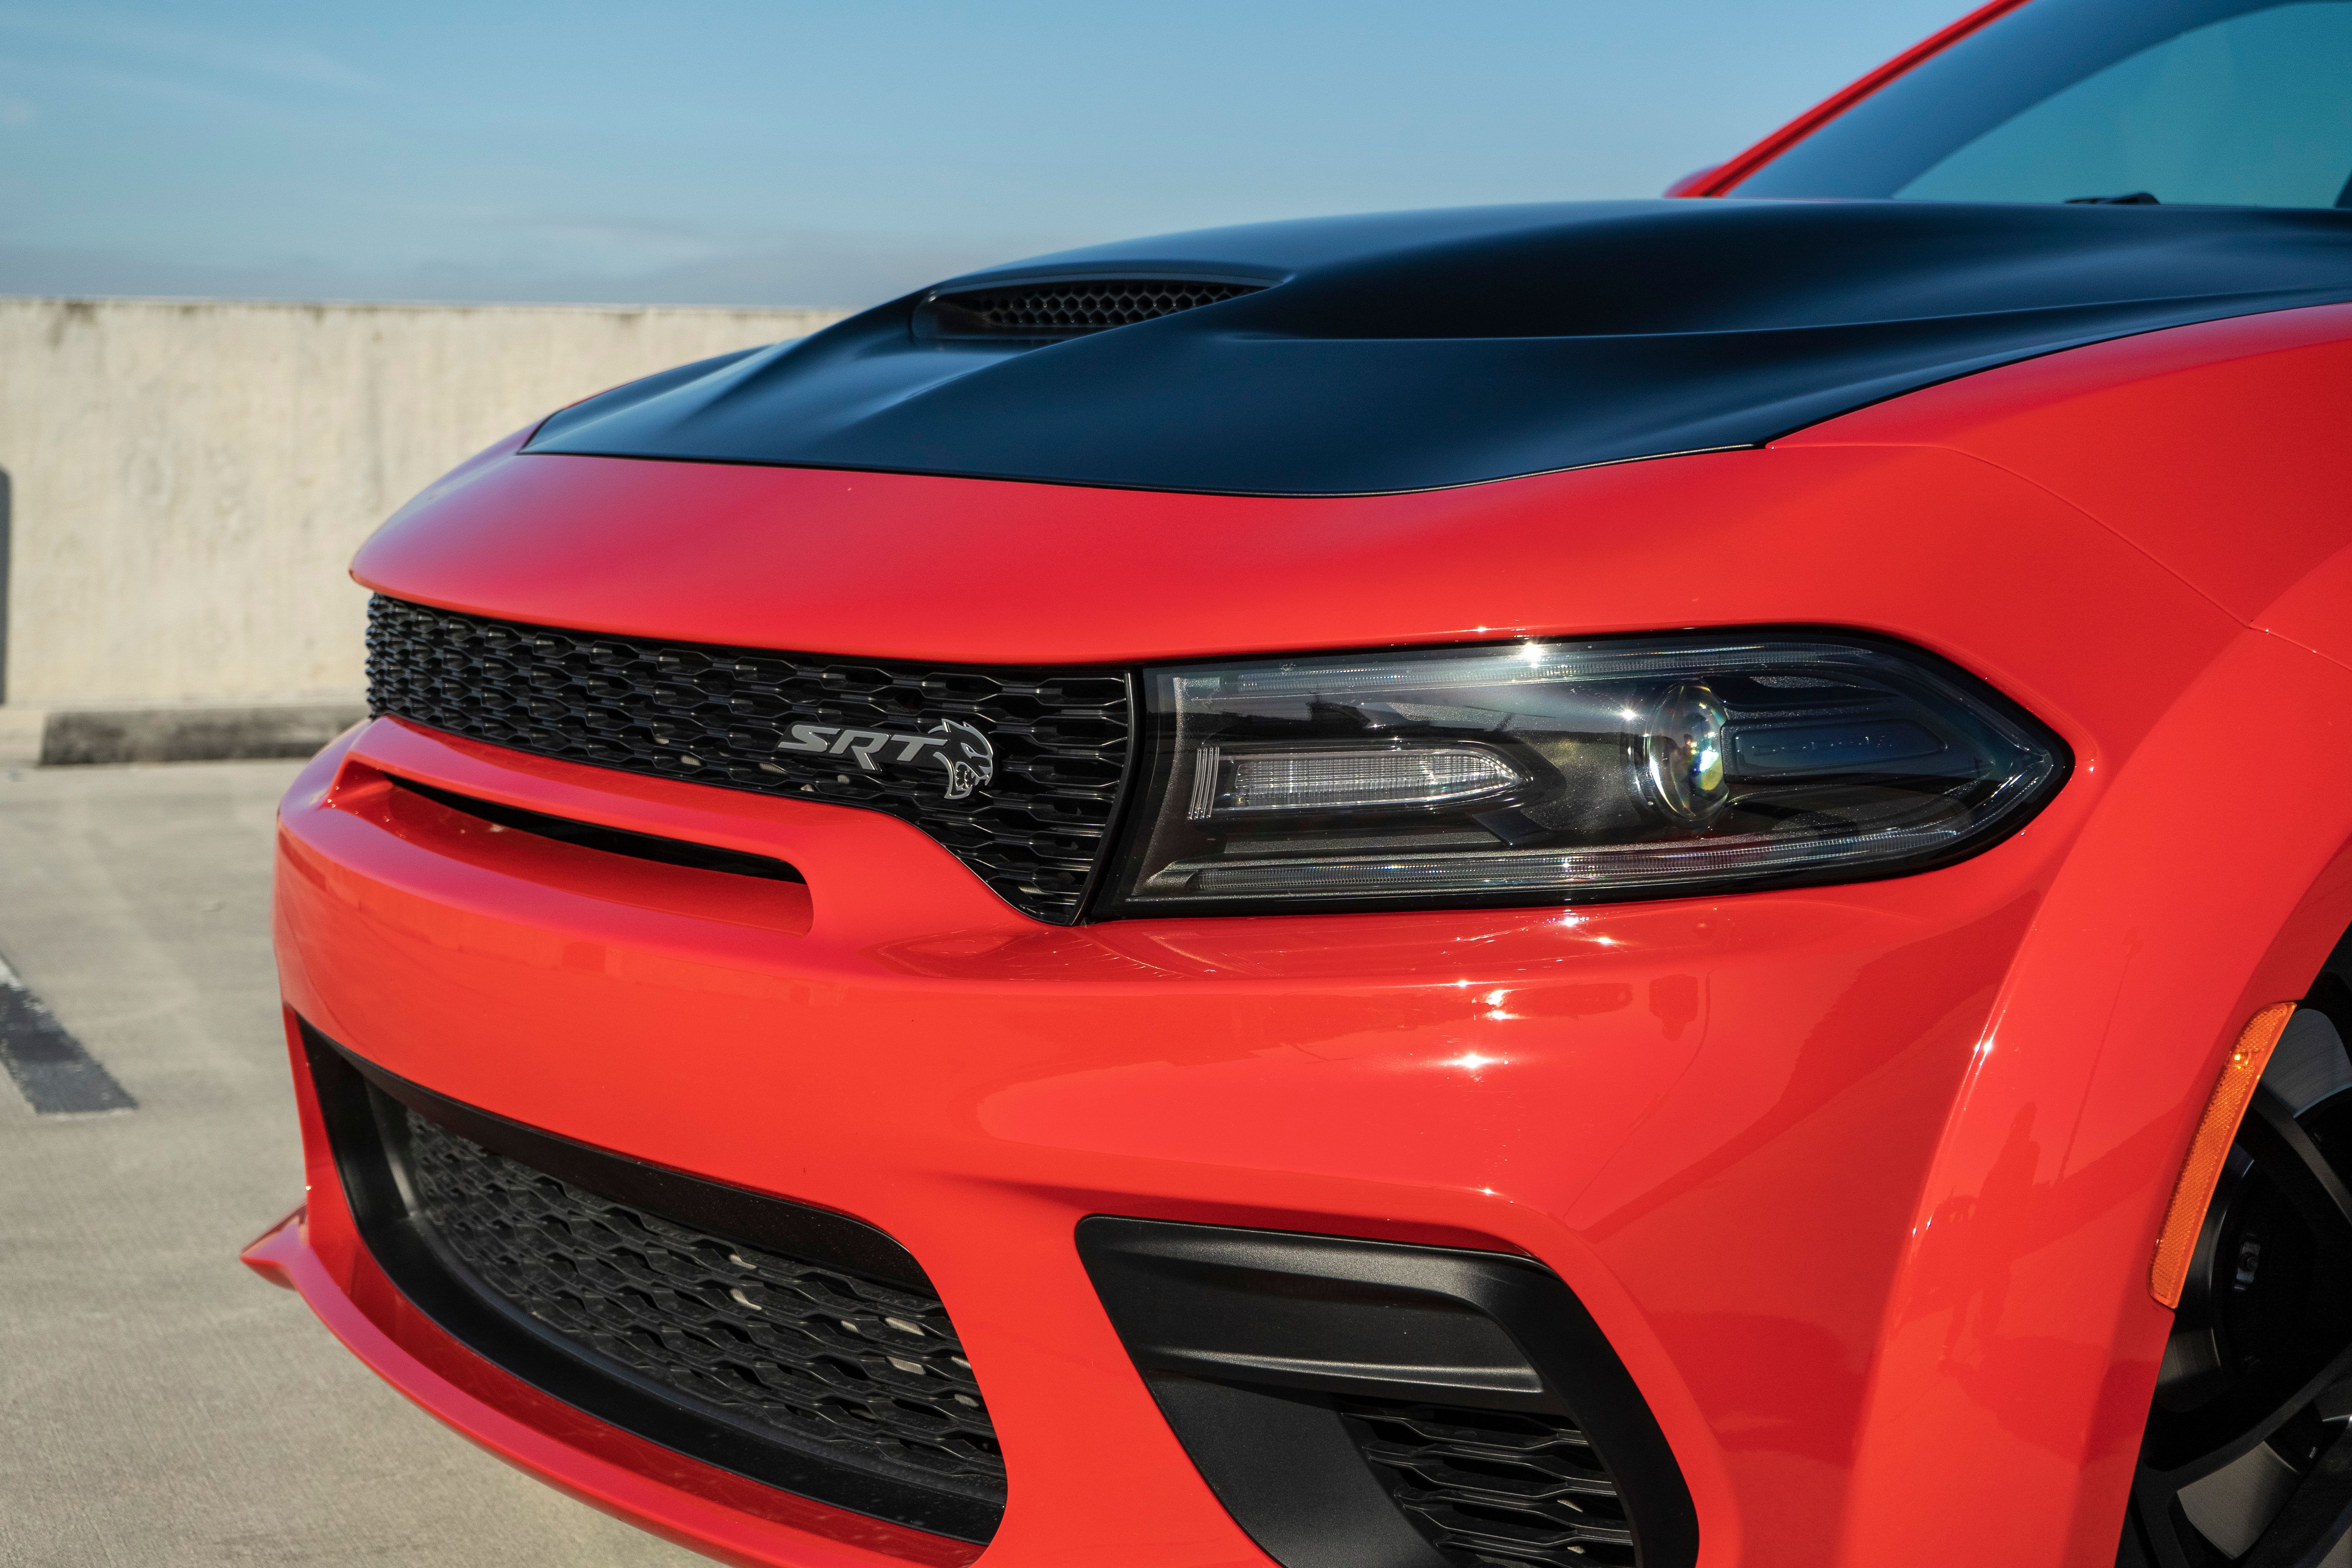 2020 Dodge Charger SRT Hellcat Widebody – Driven